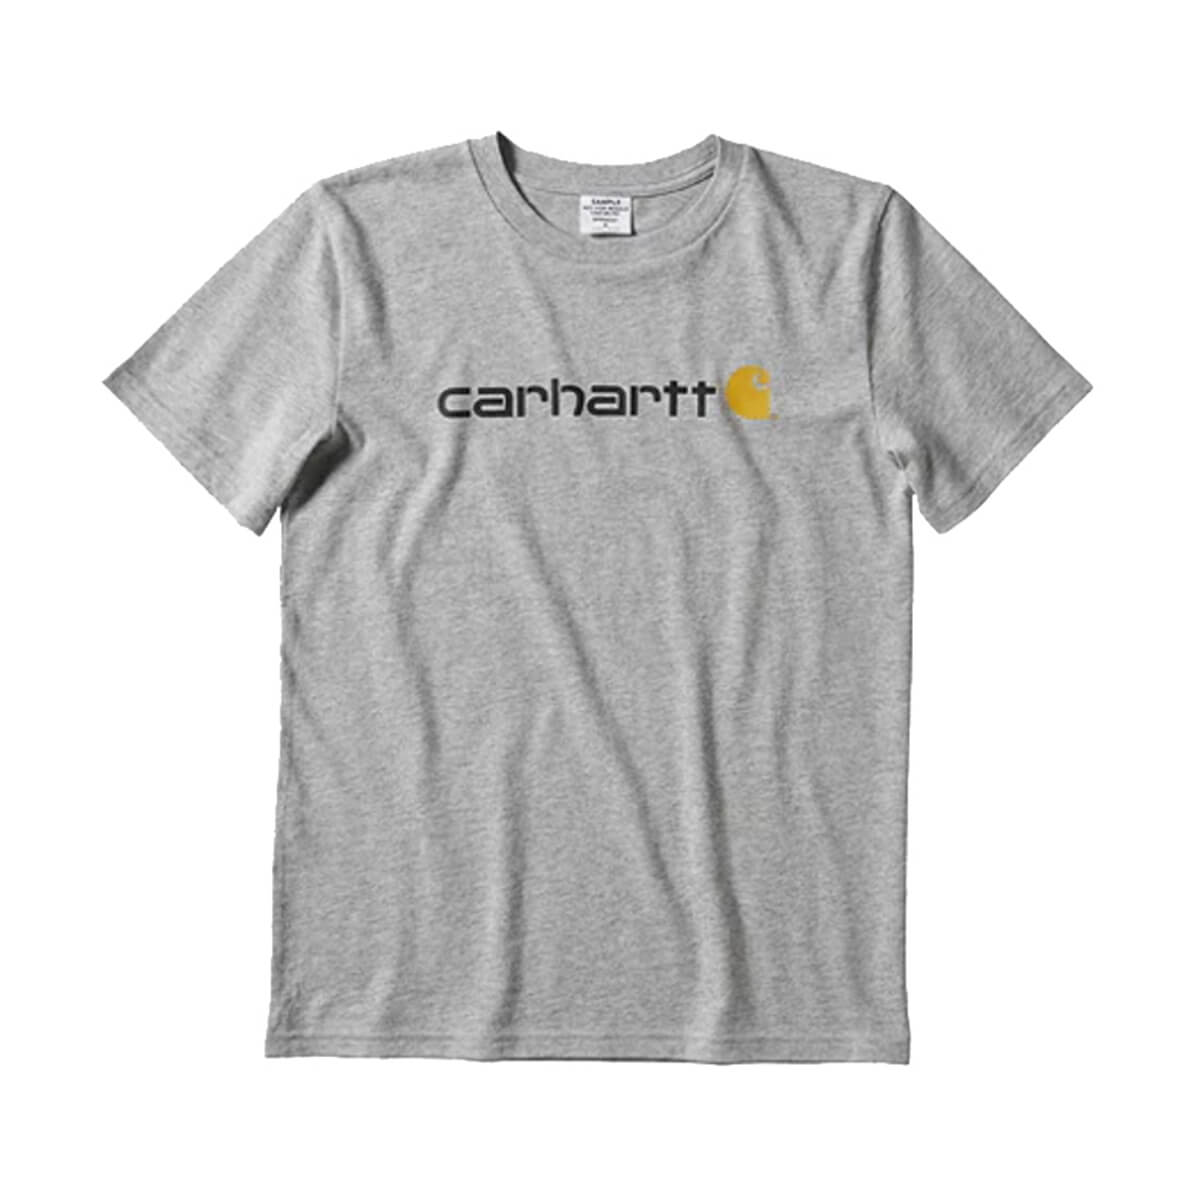 Carhartt Boy's Short Sleeve Cotton Graphic T-Shirt - Grey